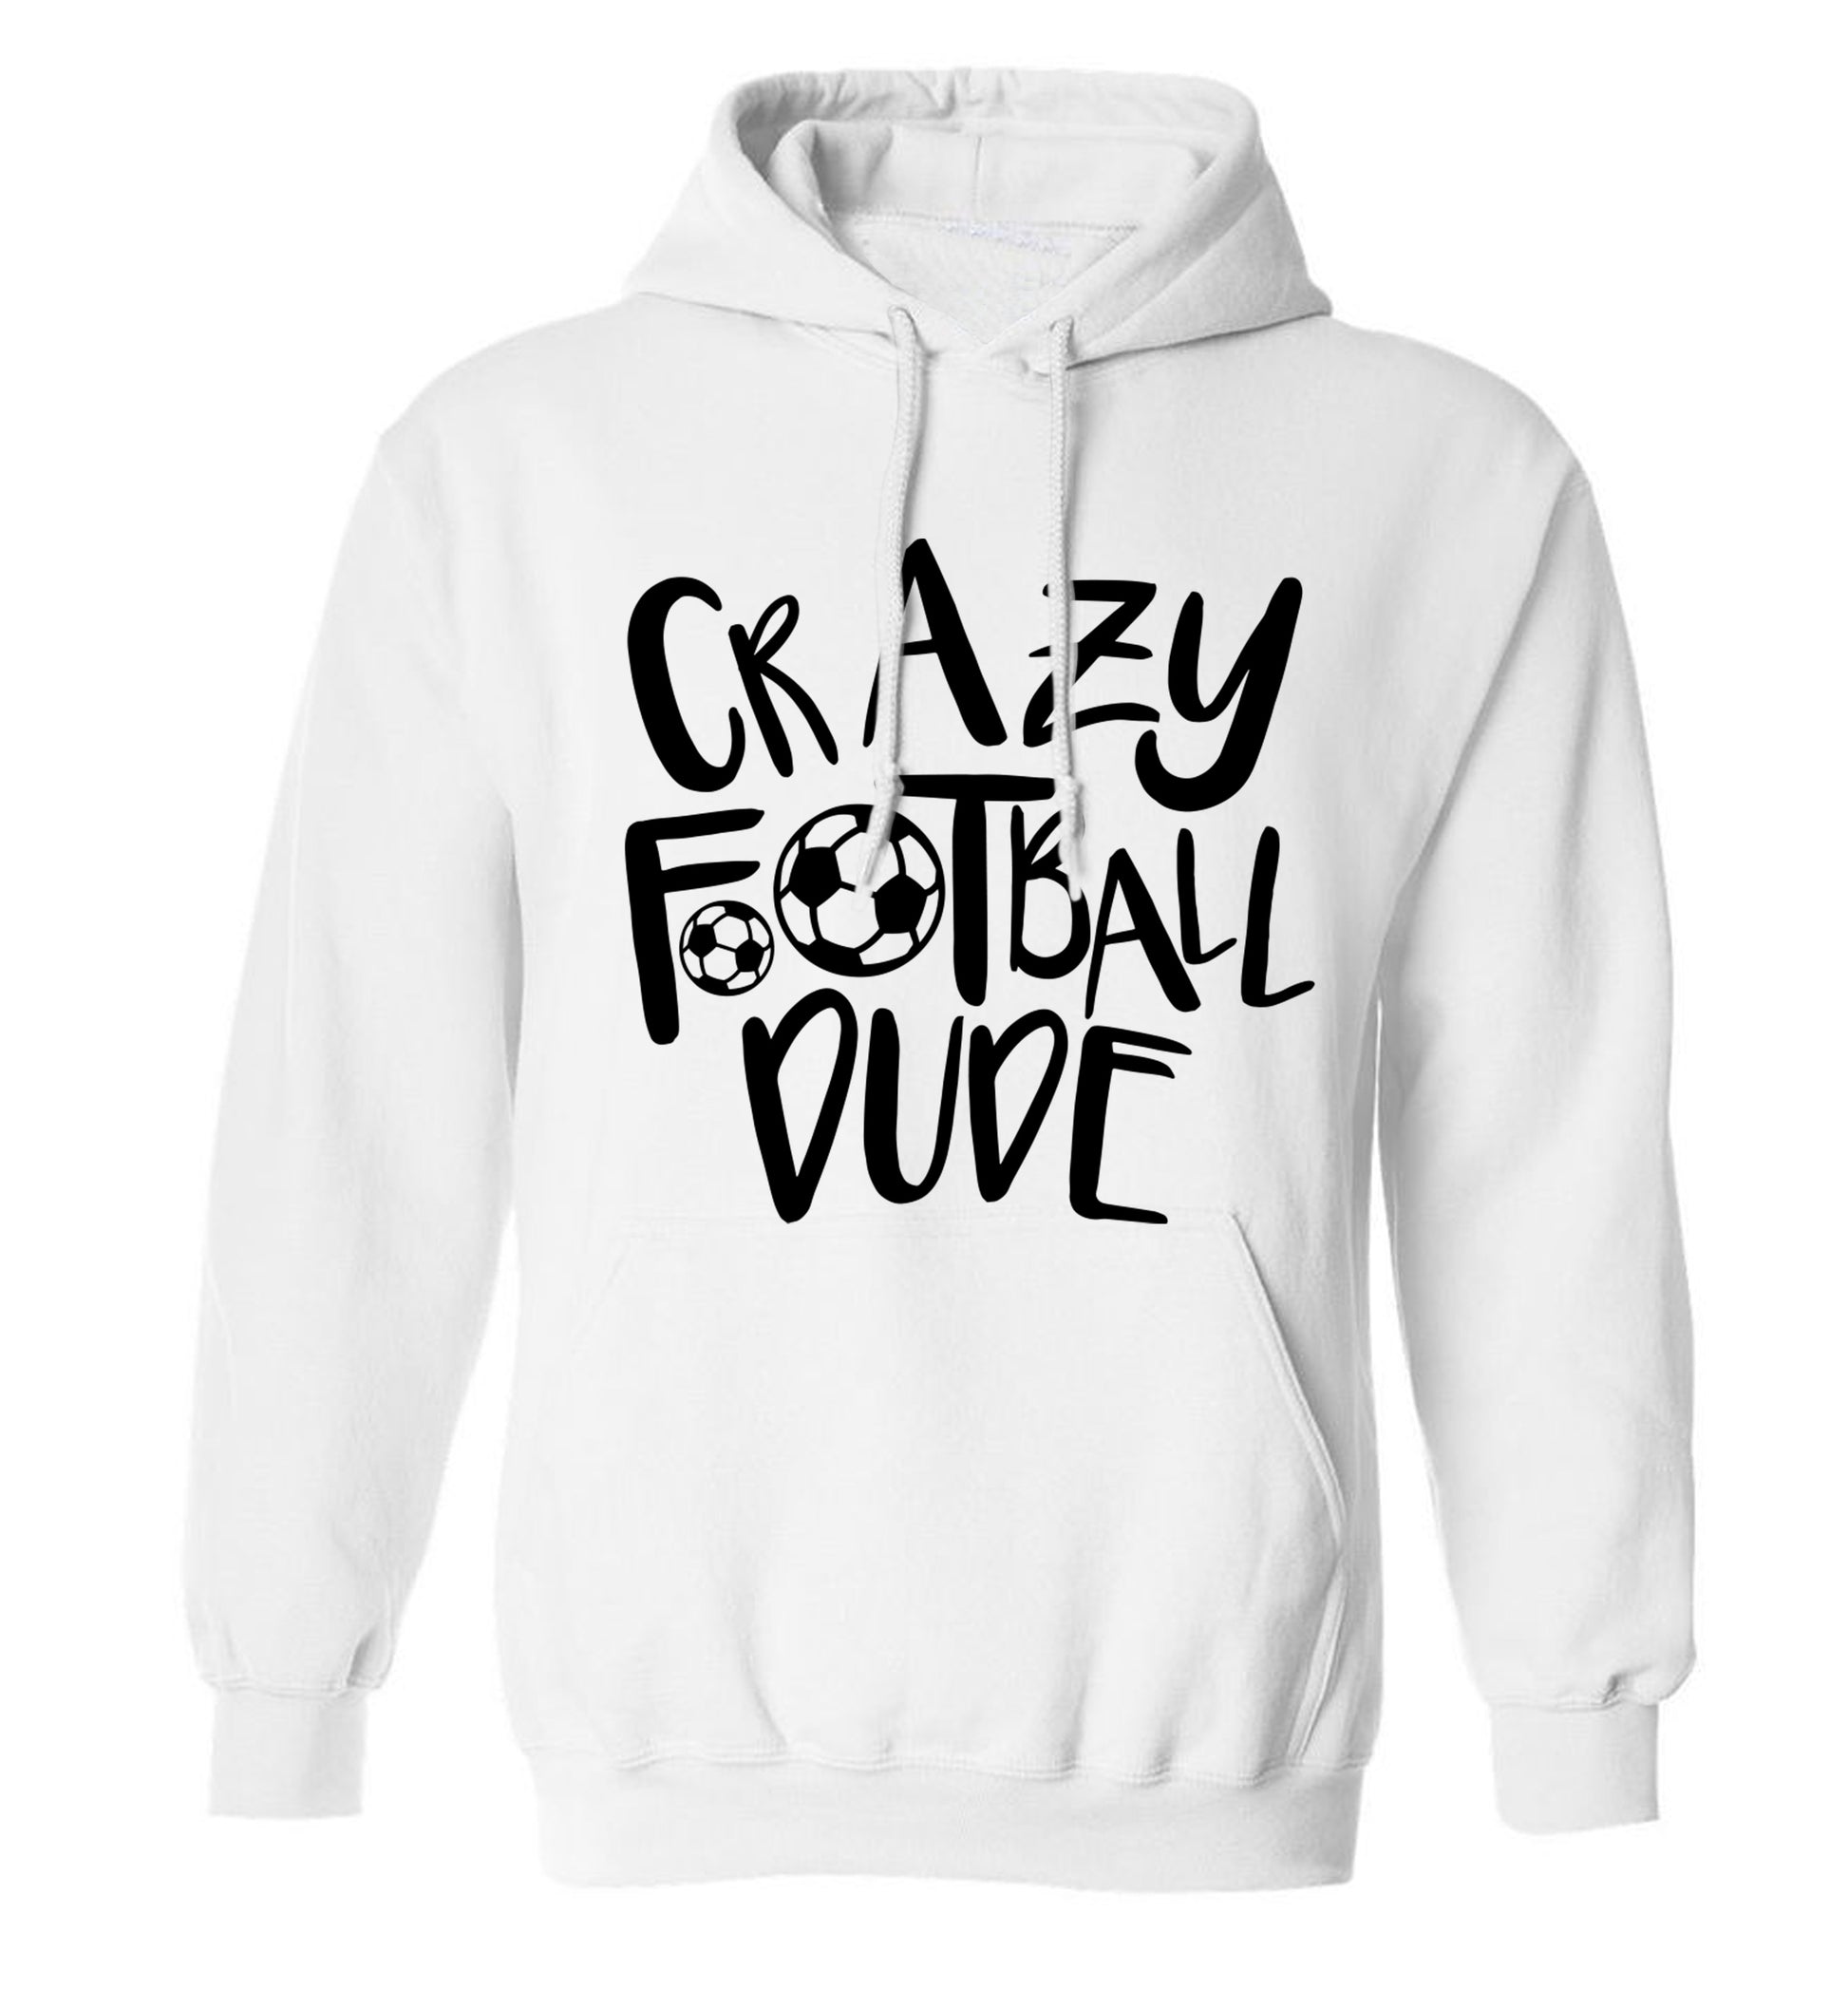 Crazy football dude adults unisexwhite hoodie 2XL